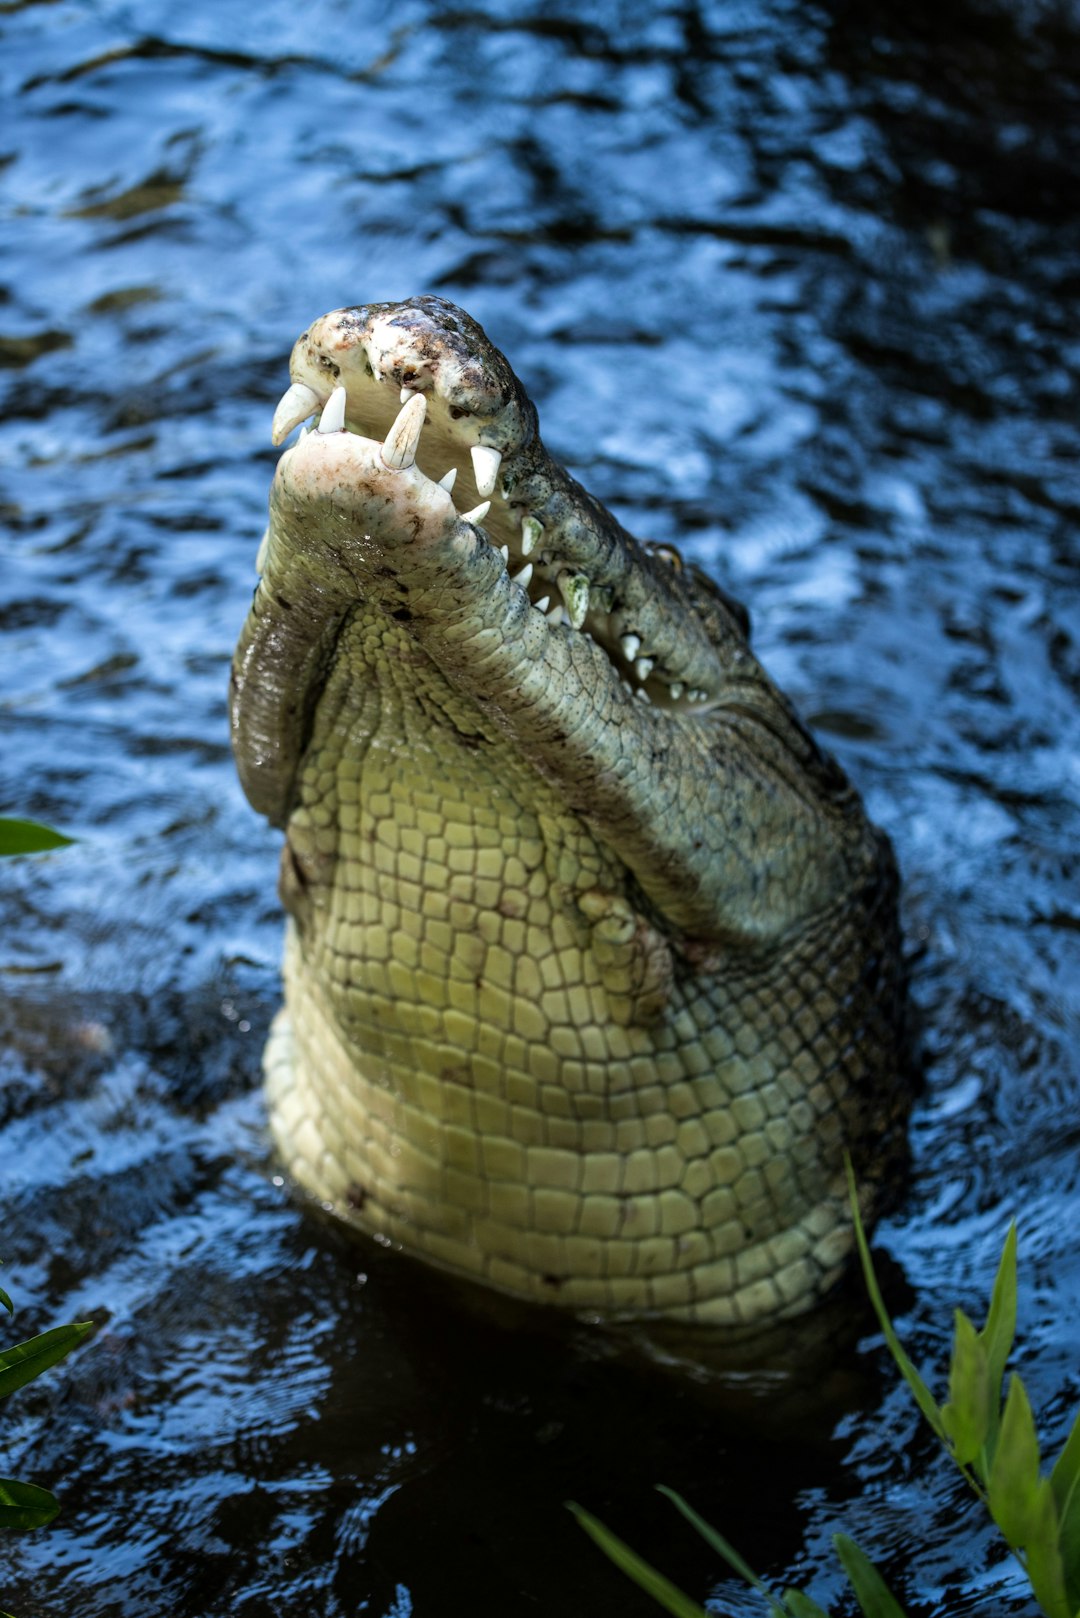  gray crocodile on water alligator